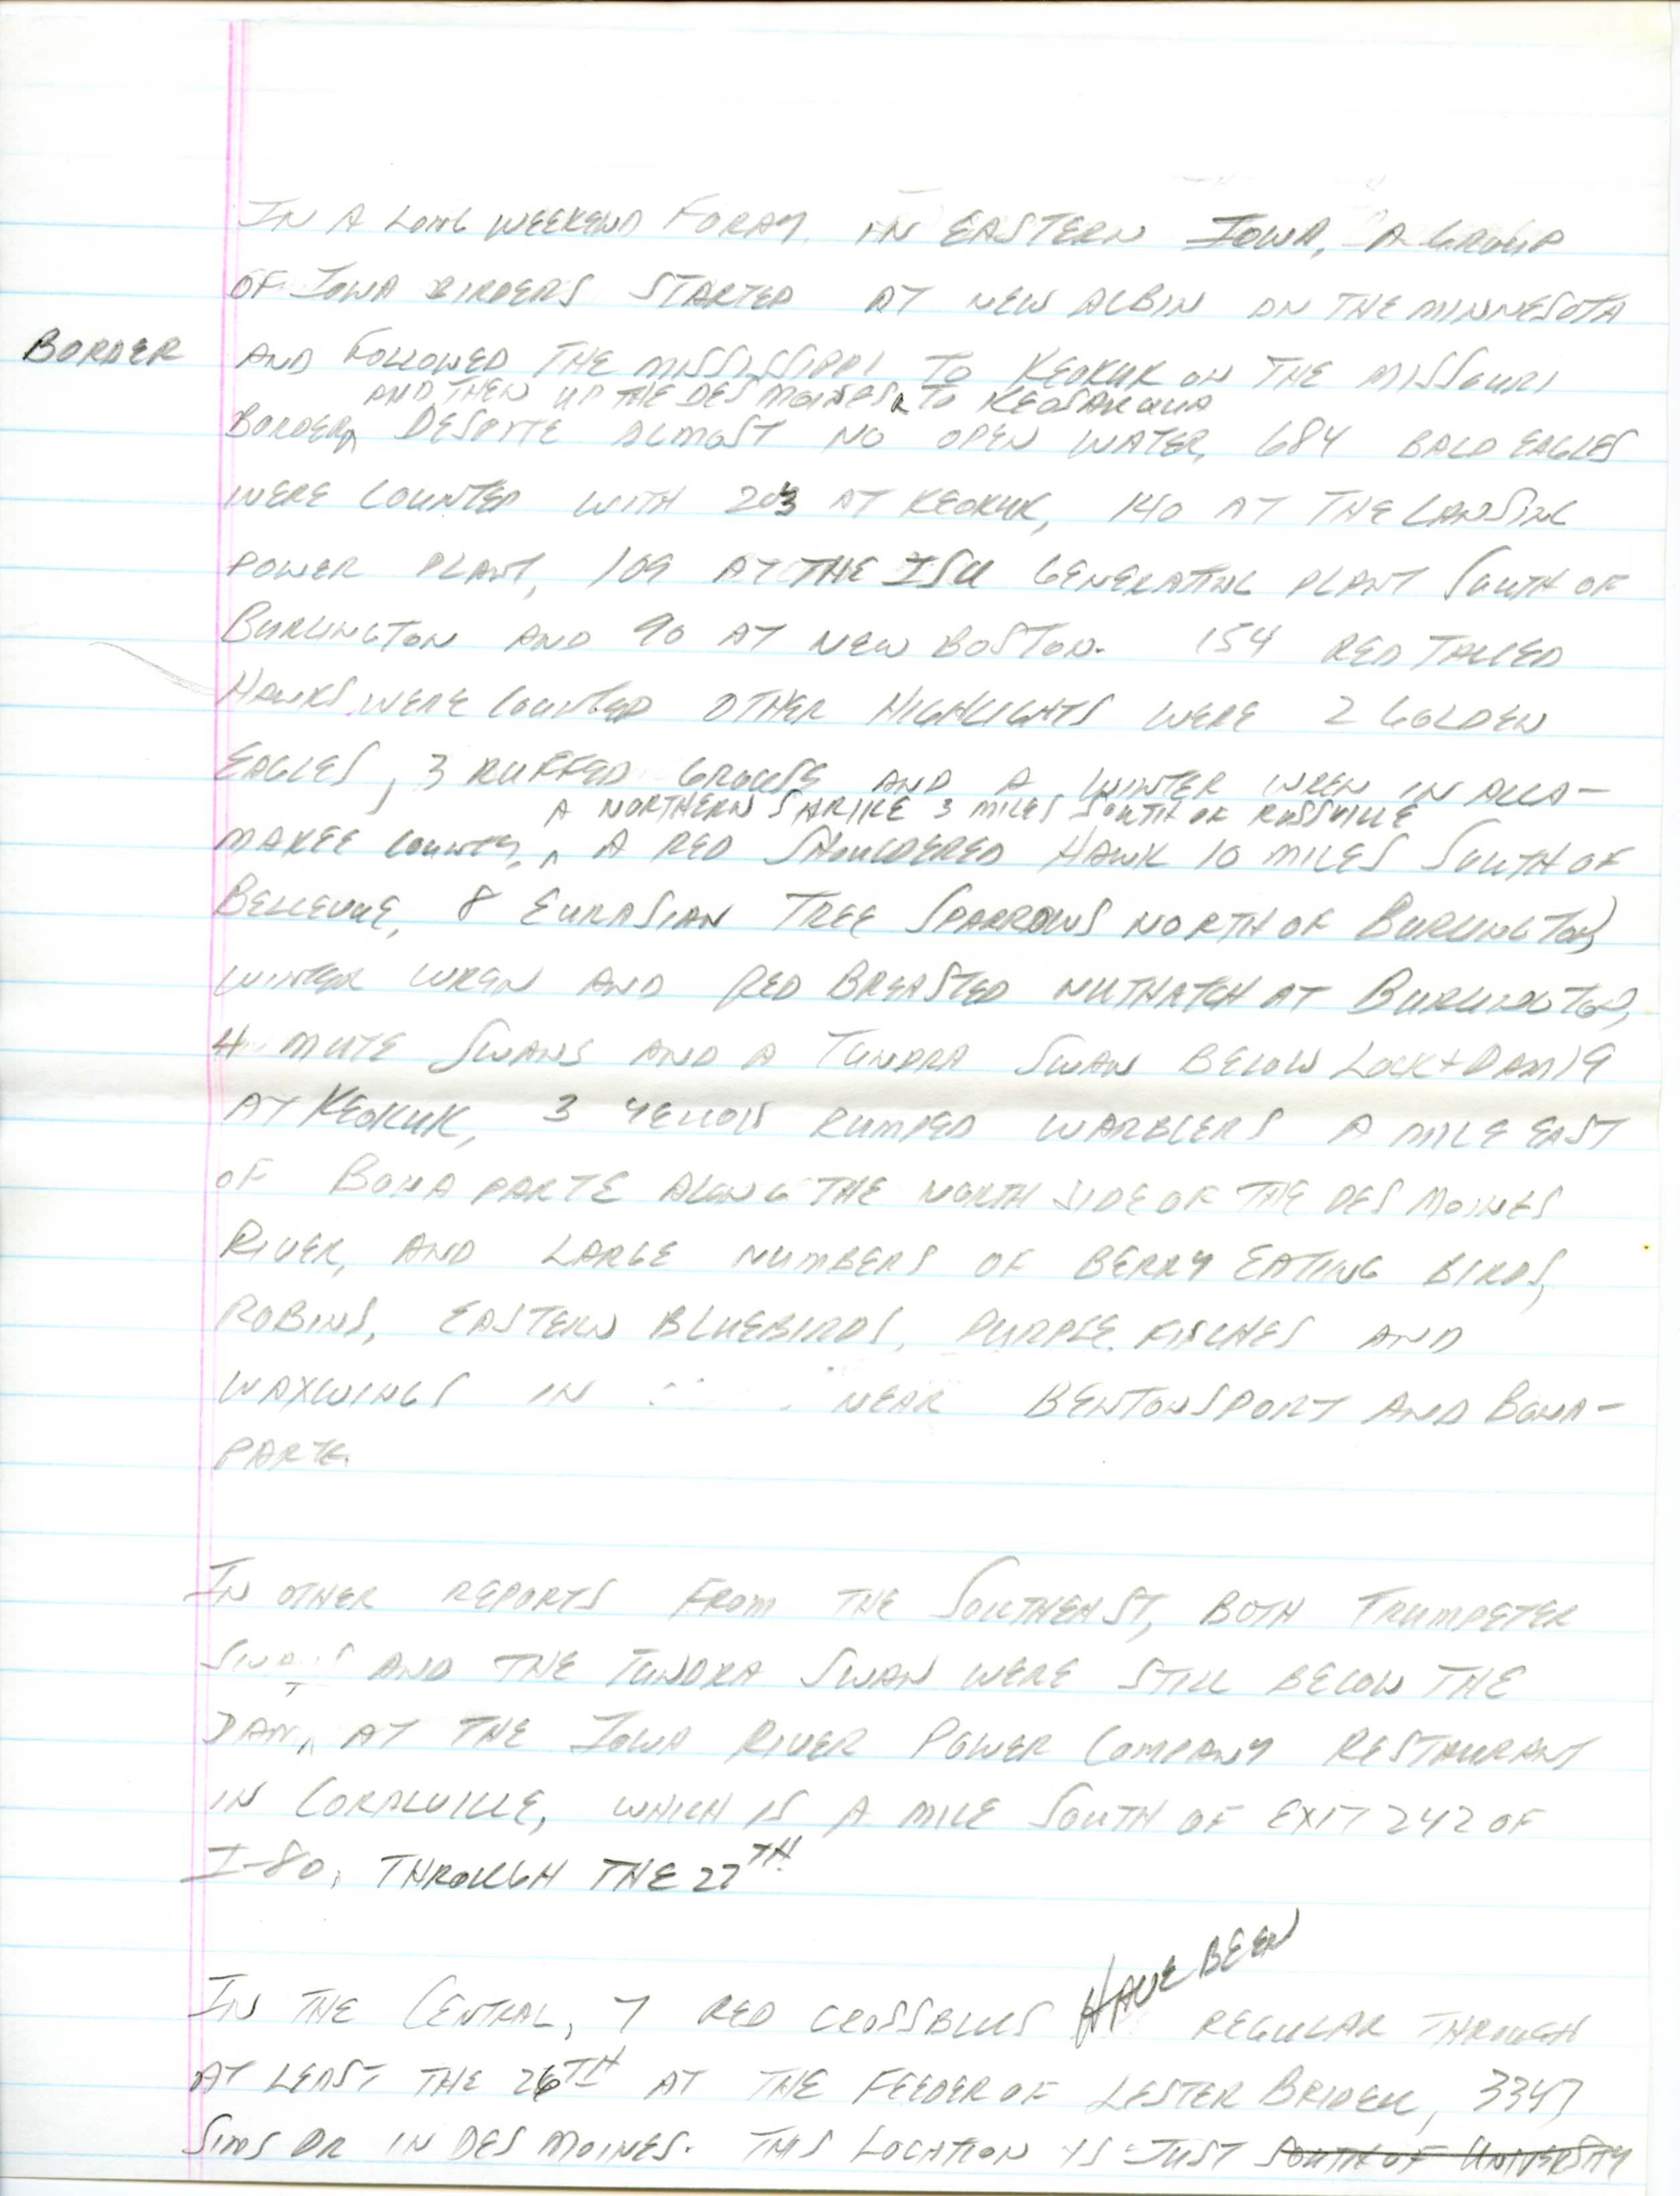 Iowa Birdline update, January 28, 1991 notes